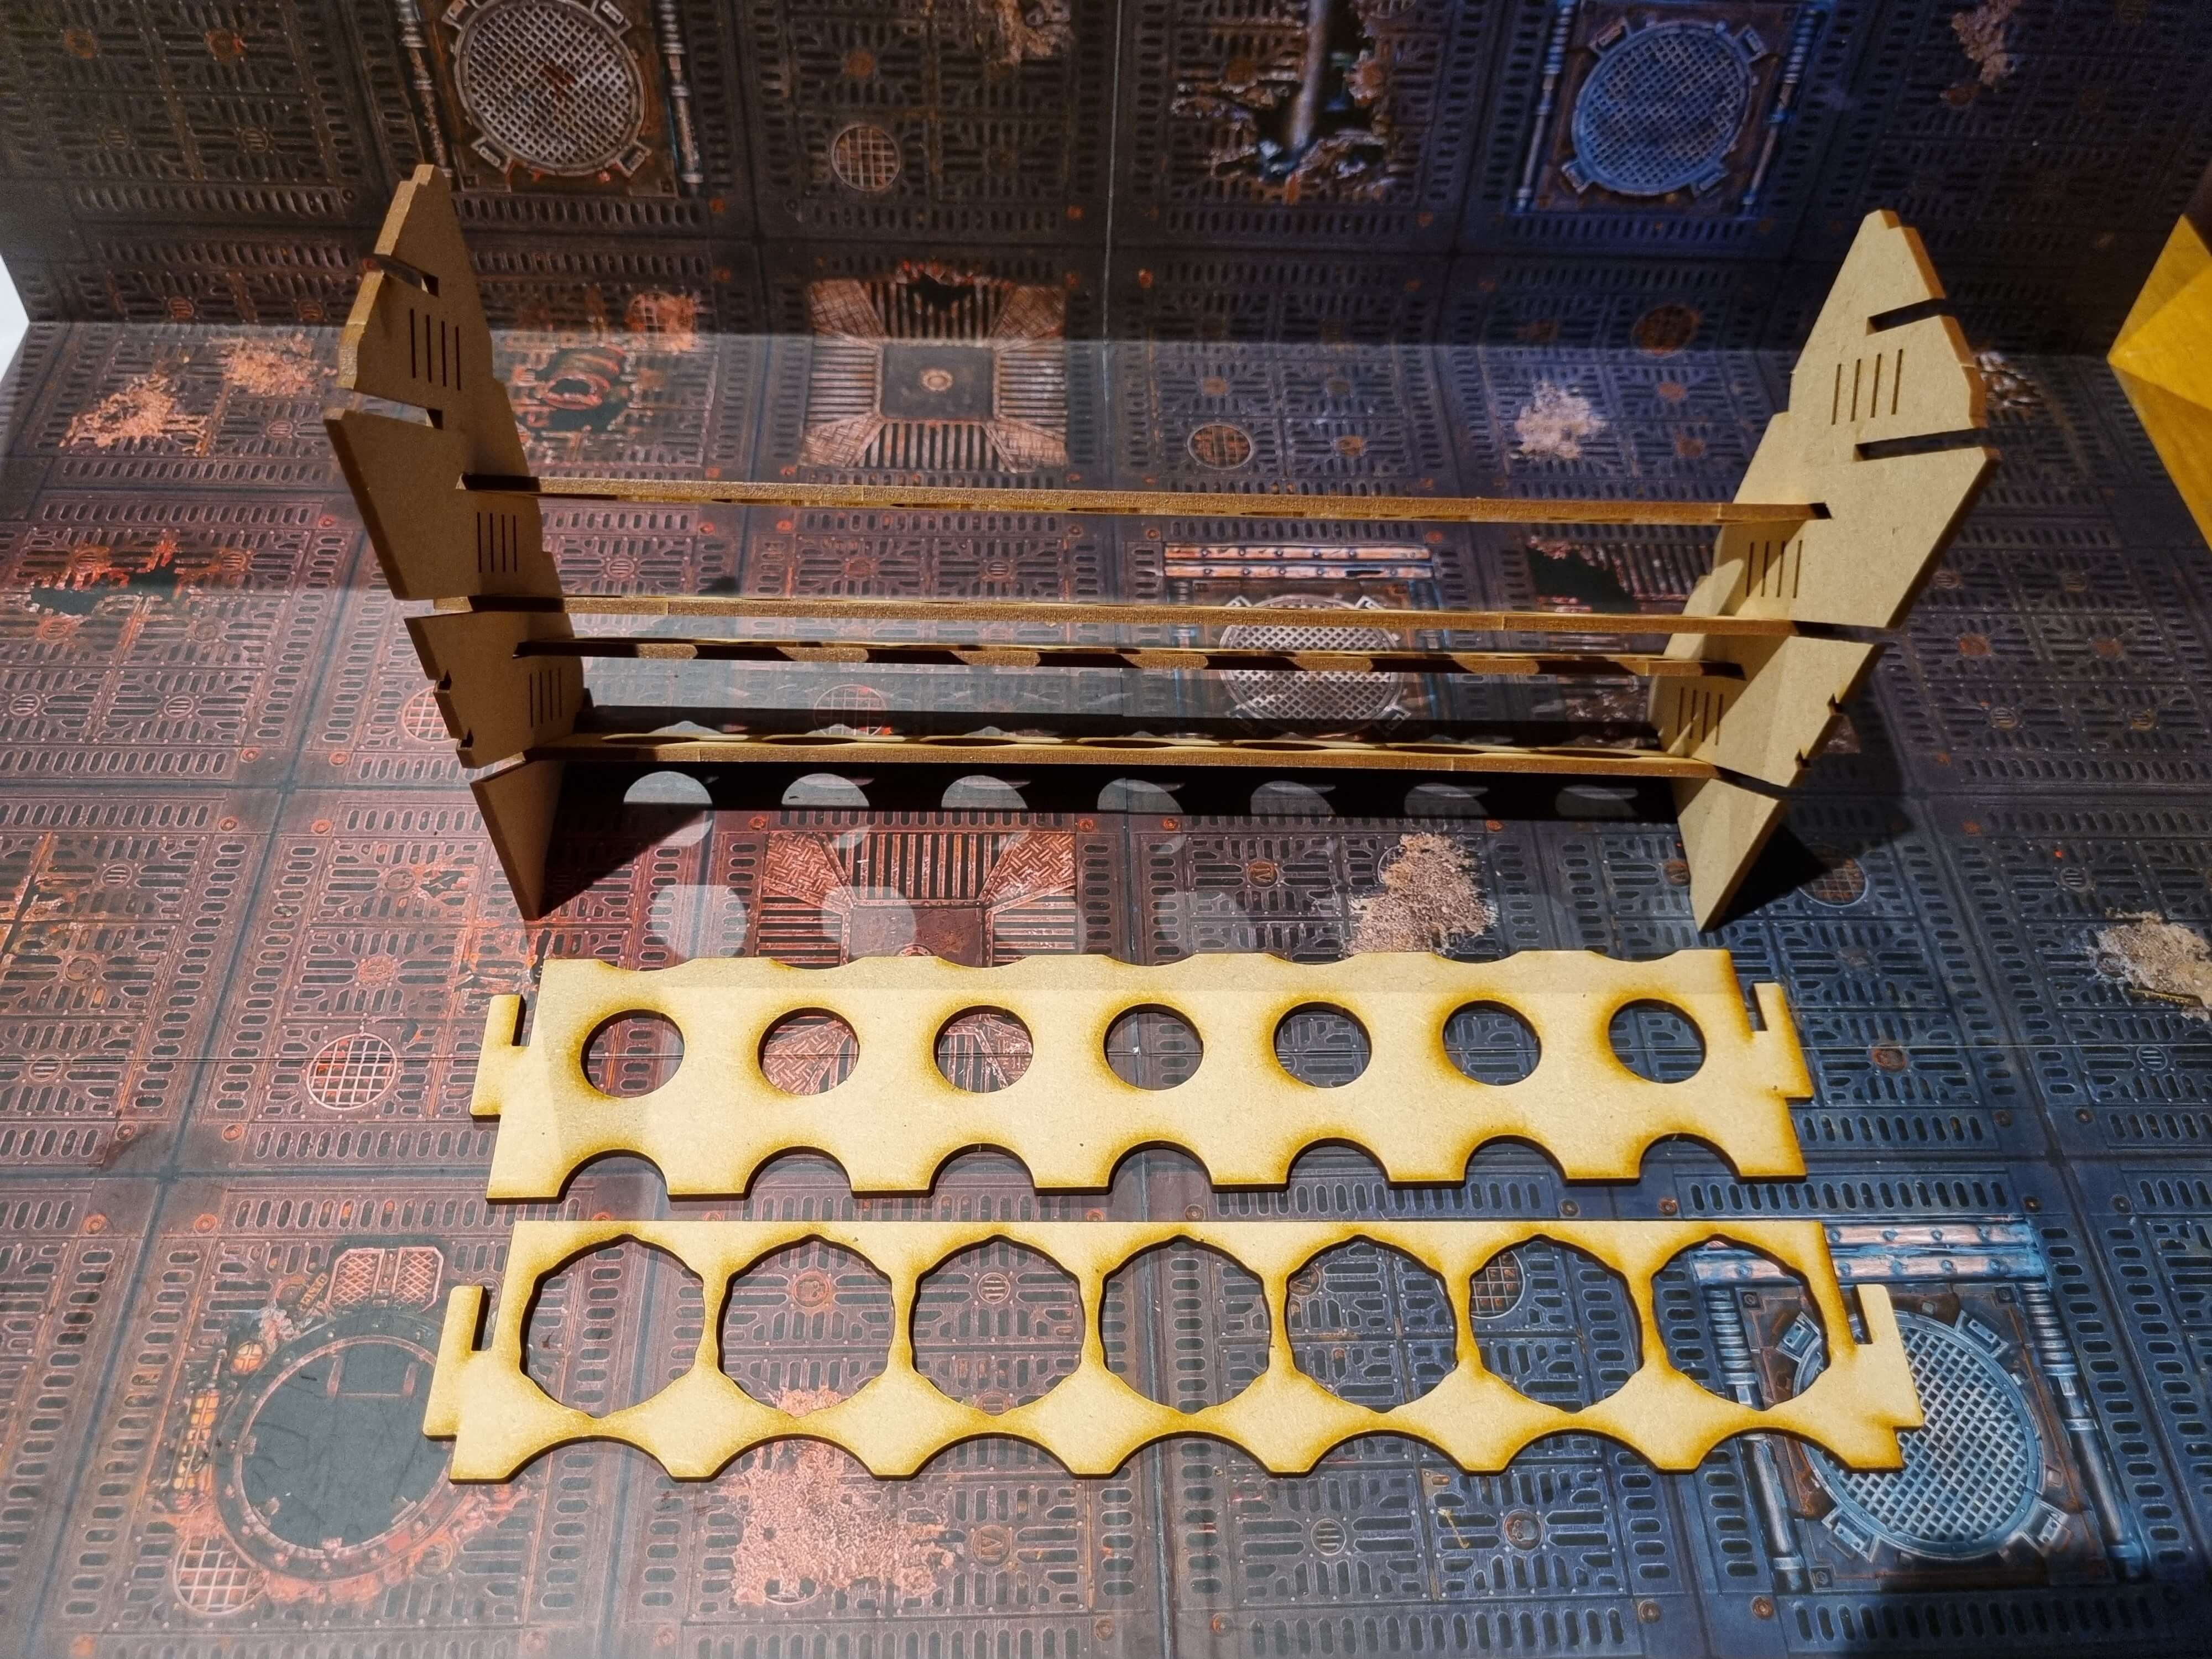 Modular Rack - 3 Row